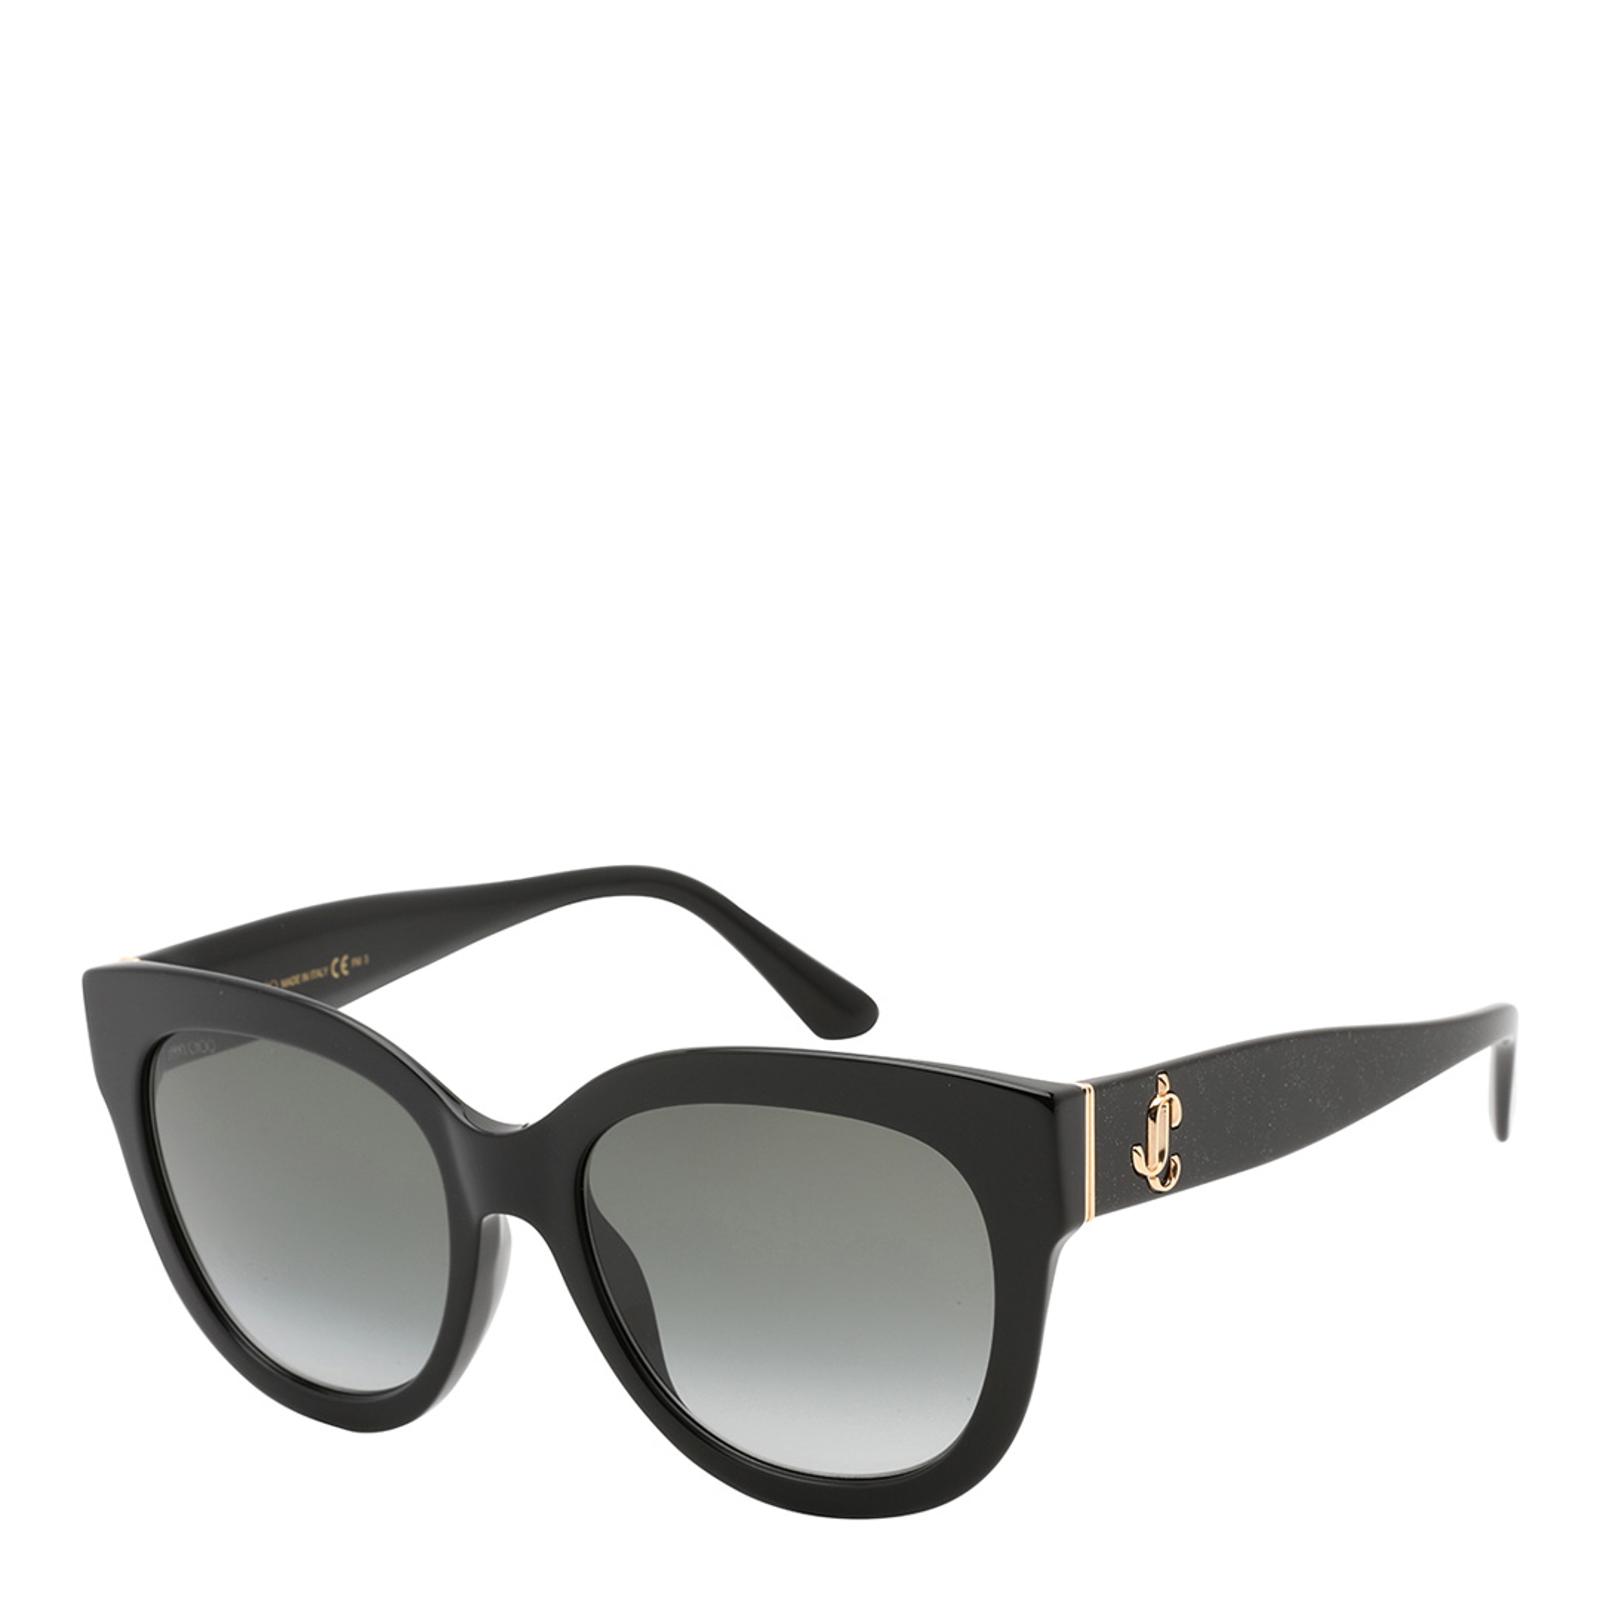 Women's Jimmy Choo Black Glitter/Grey Shaded Sunglasses 54mm - BrandAlley